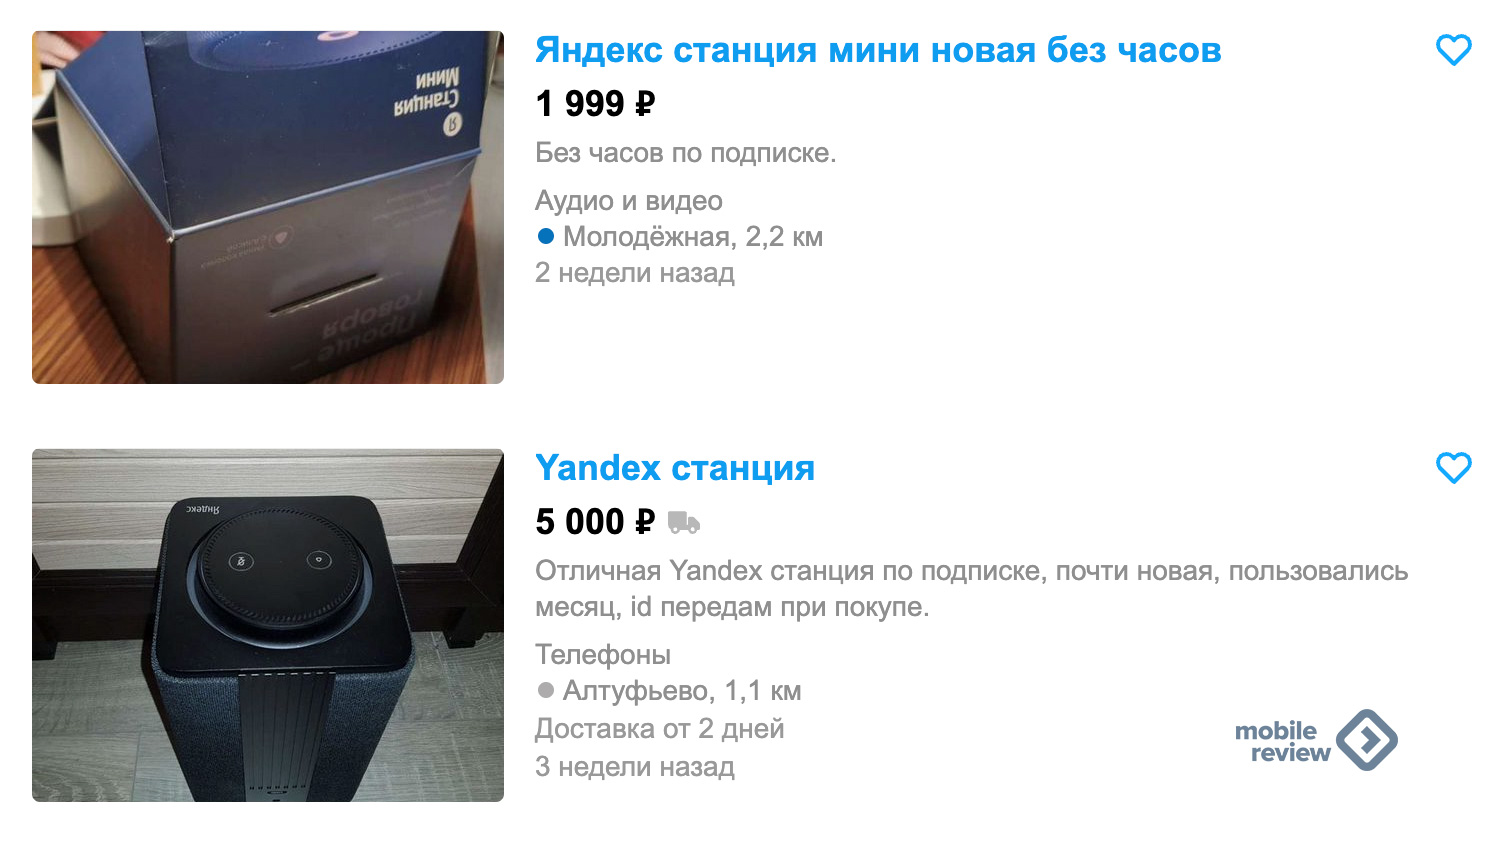 154083 «Яндекс.Станция» по подписке — мошенничество и убытки «Яндекса». Пишите в полицию!